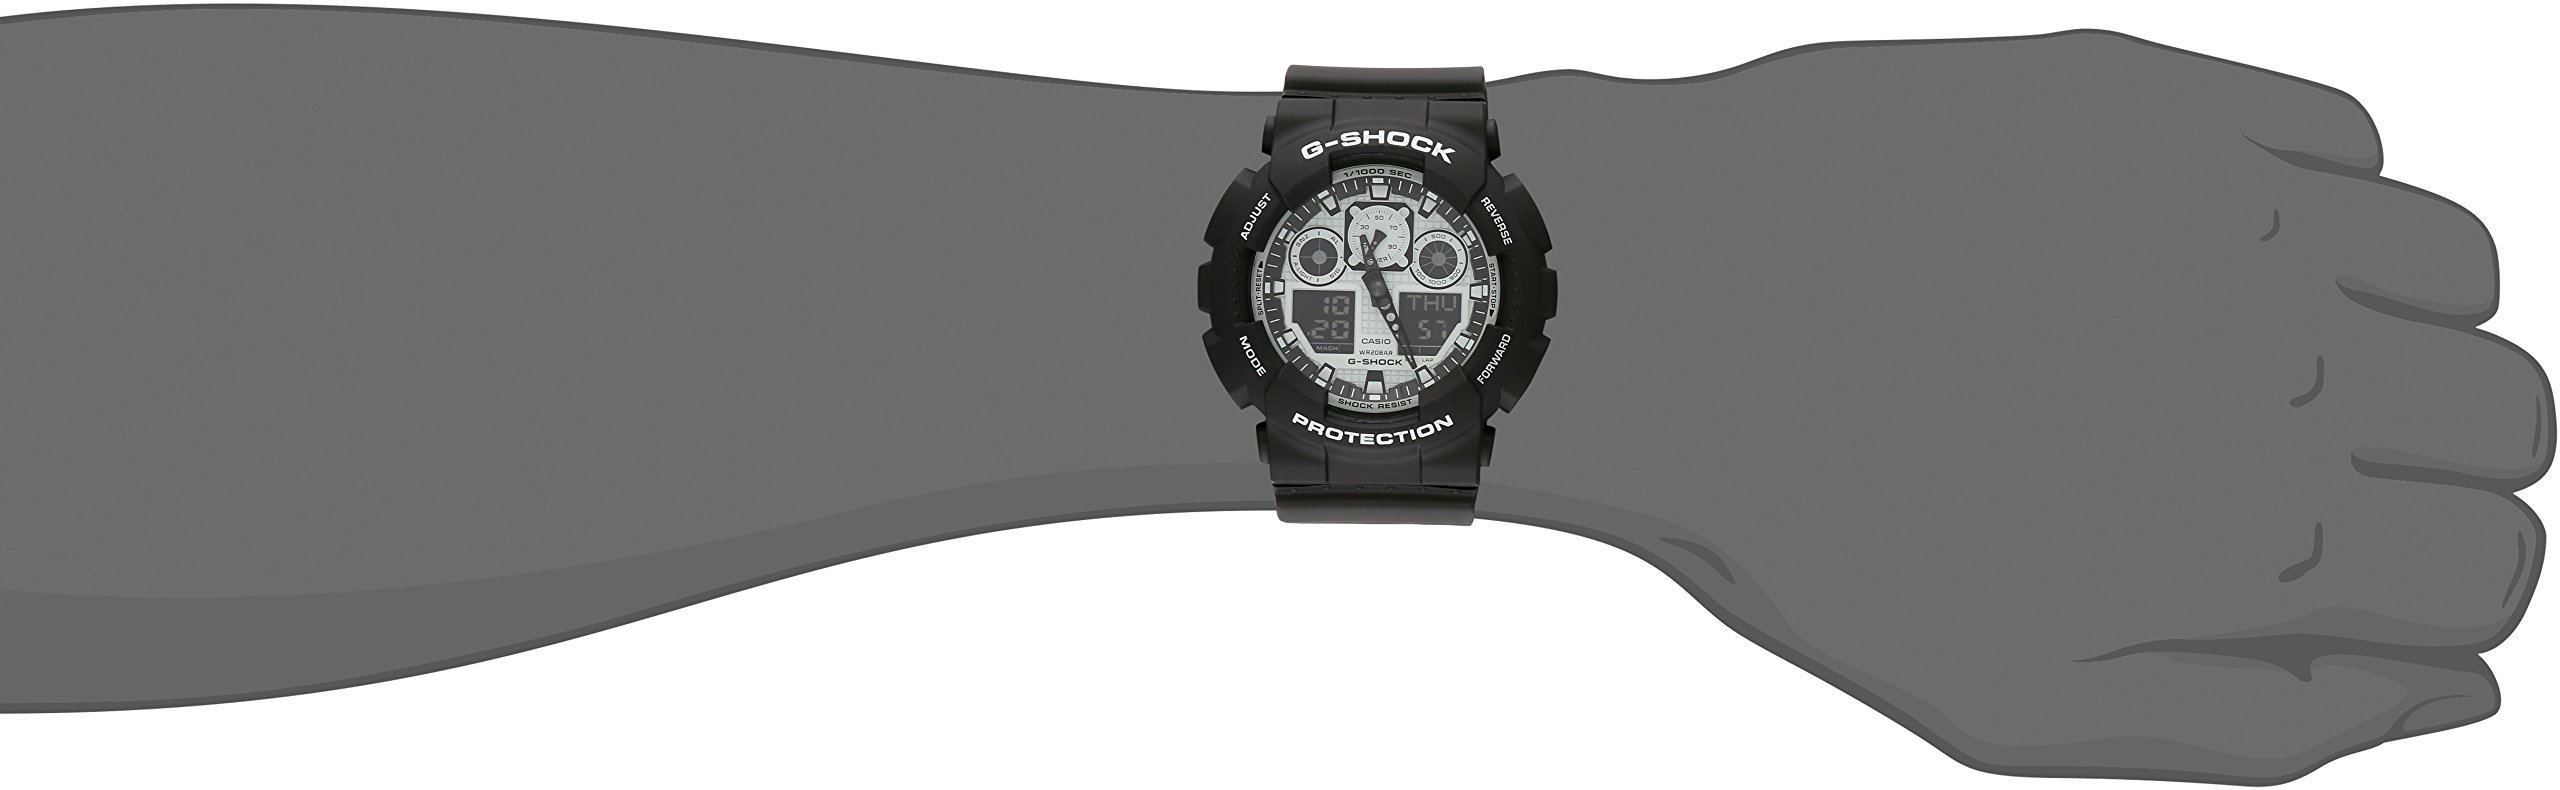 Casio G-Shock GA-100BW-1A White and Black Series Luxury Watch - Black/One Size